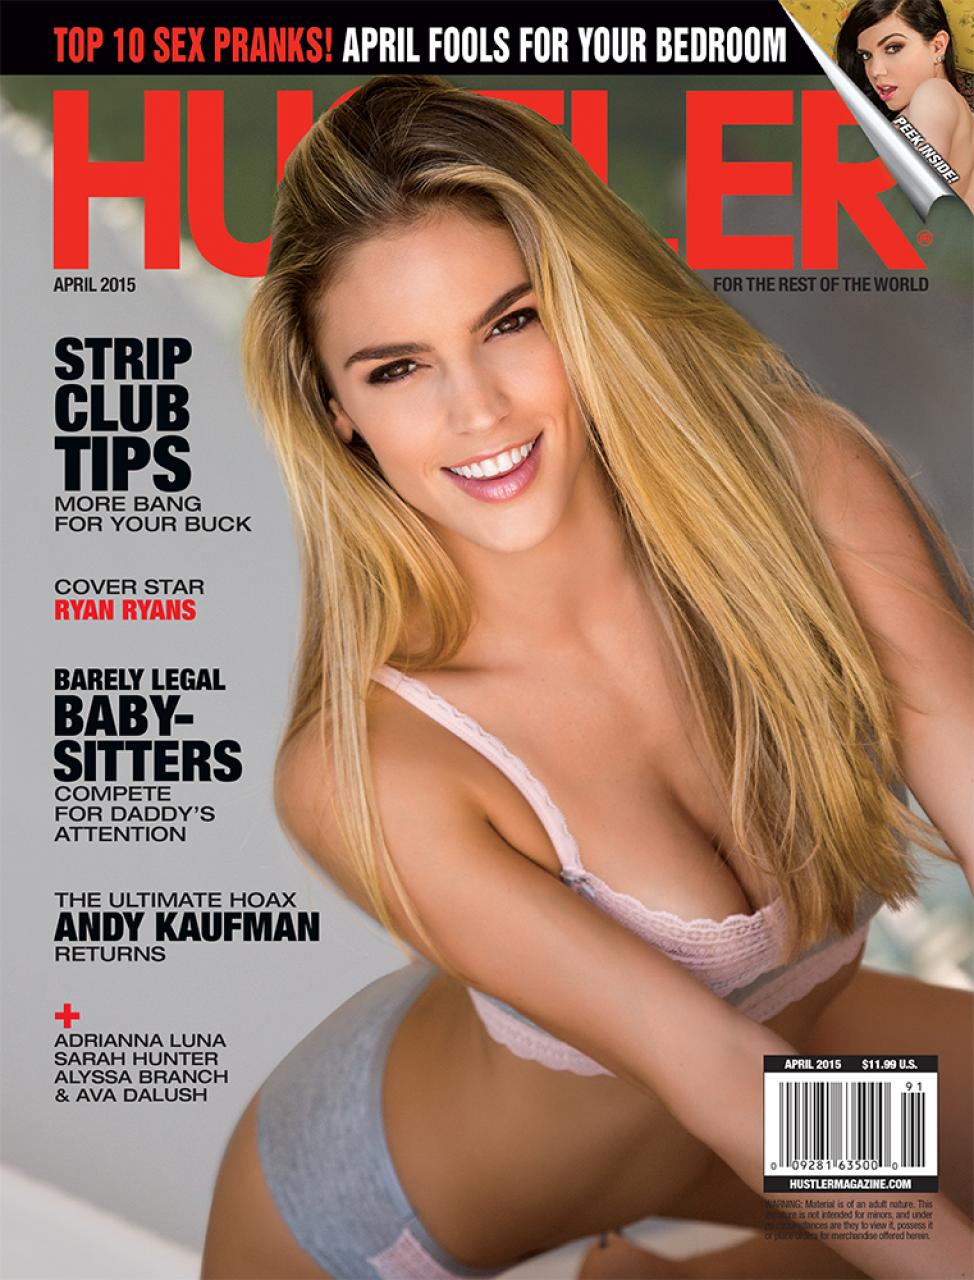 April 2015 - HUSTLER Magazine.